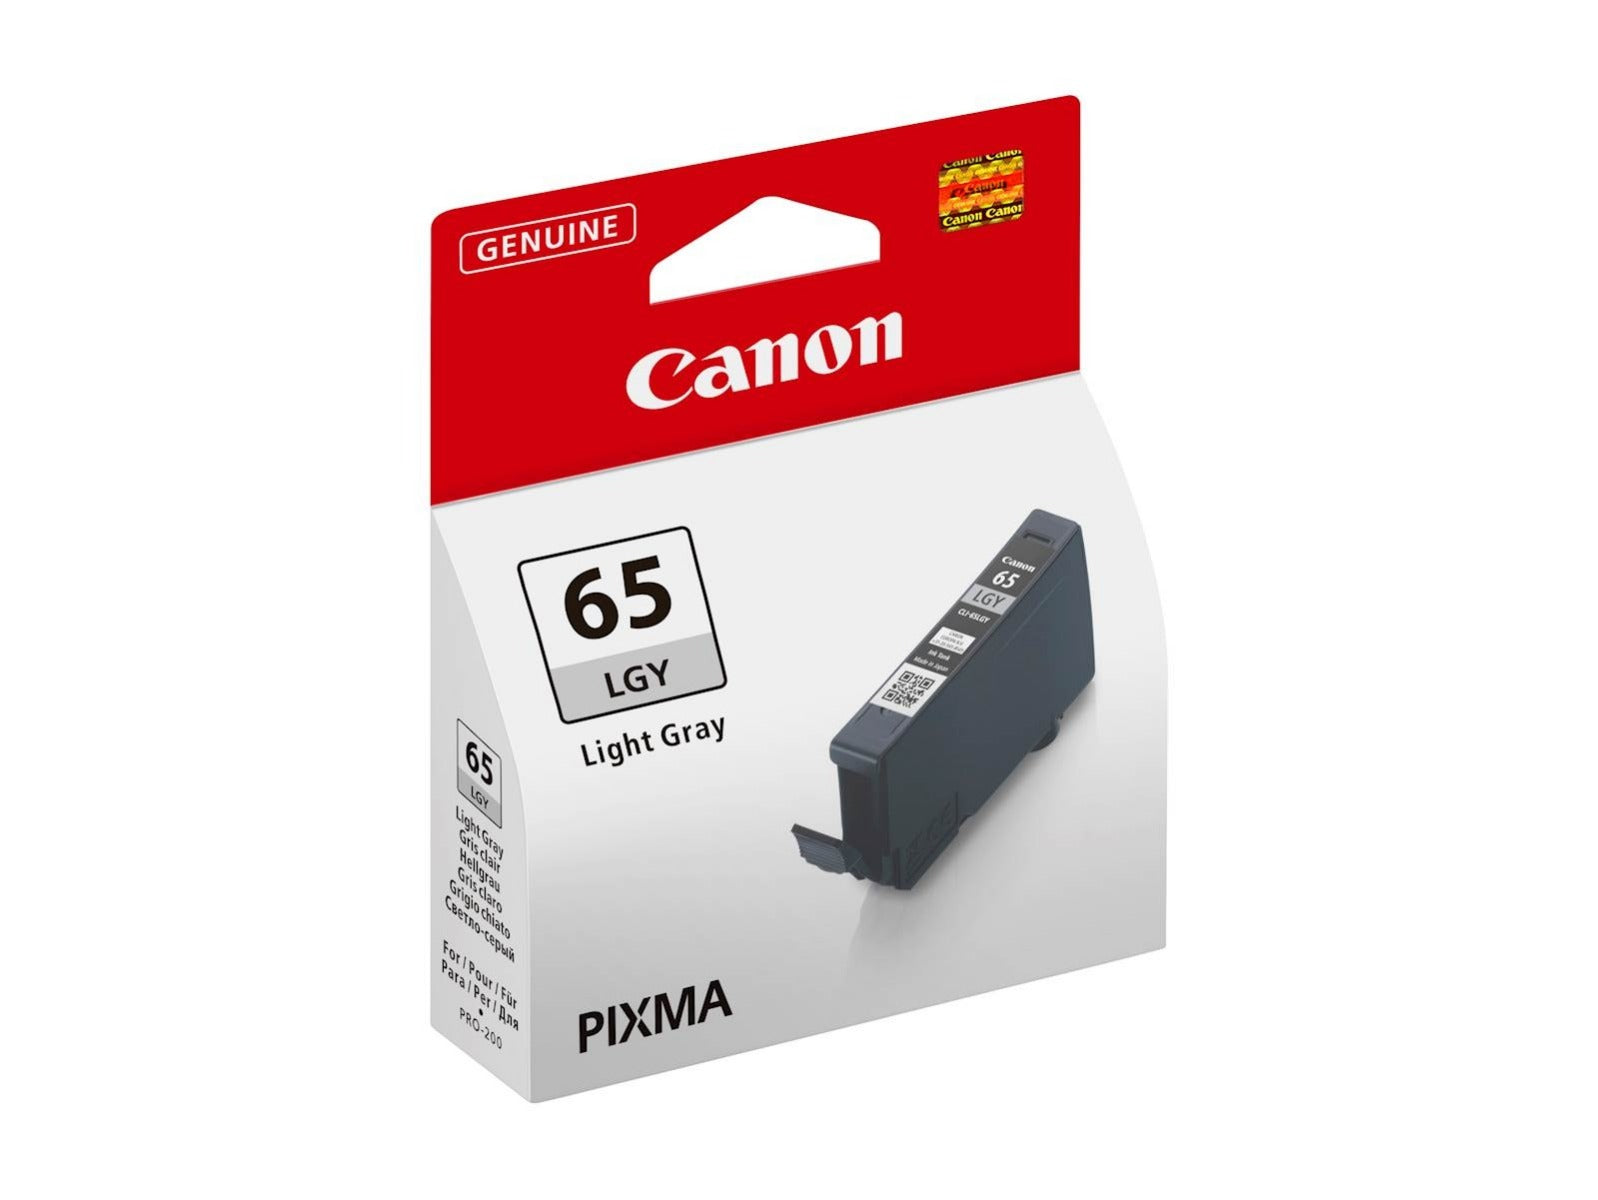 Canon CLI-65LGY Original Ink Cartridge Light Grey for PIXMA PRO-200 Printer - Product Photo 1